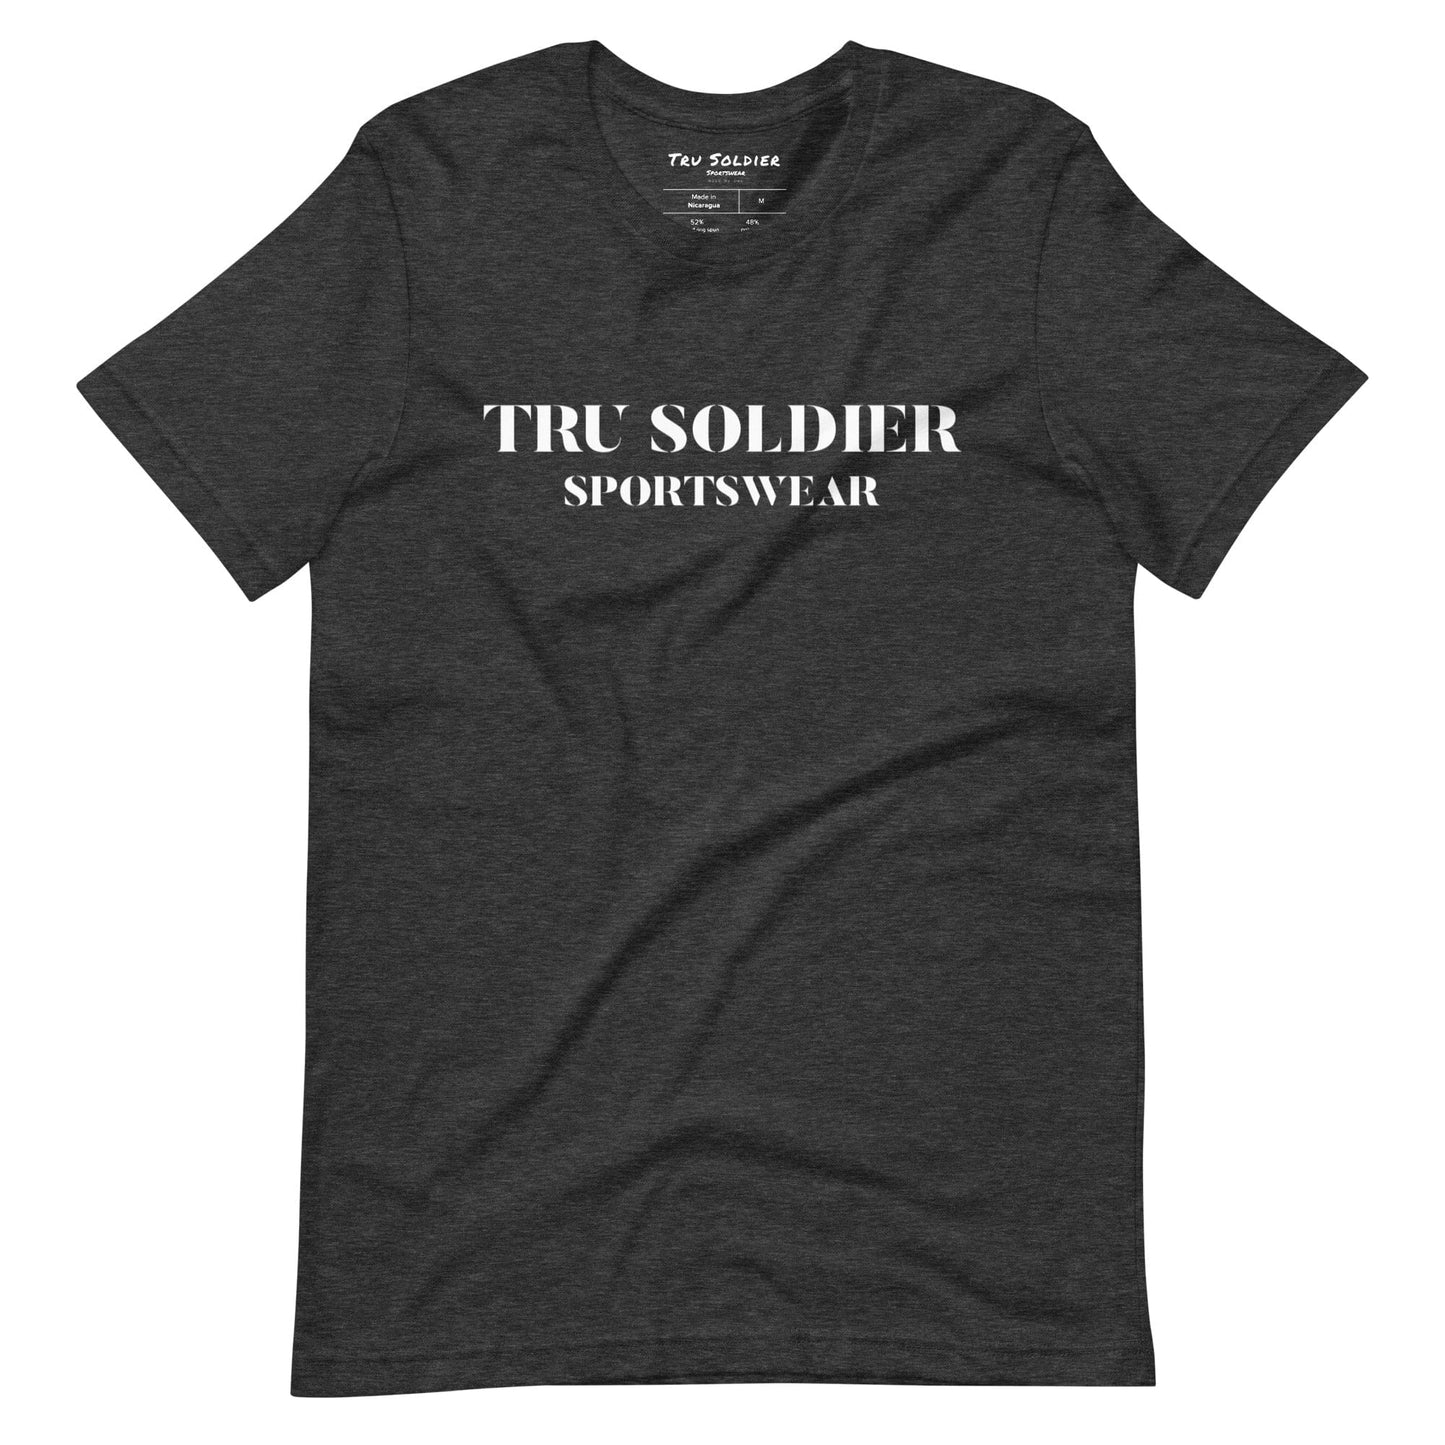 Tru Soldier Sportswear  Dark Grey Heather / XS Tru Soldier Sportswear t-shirt